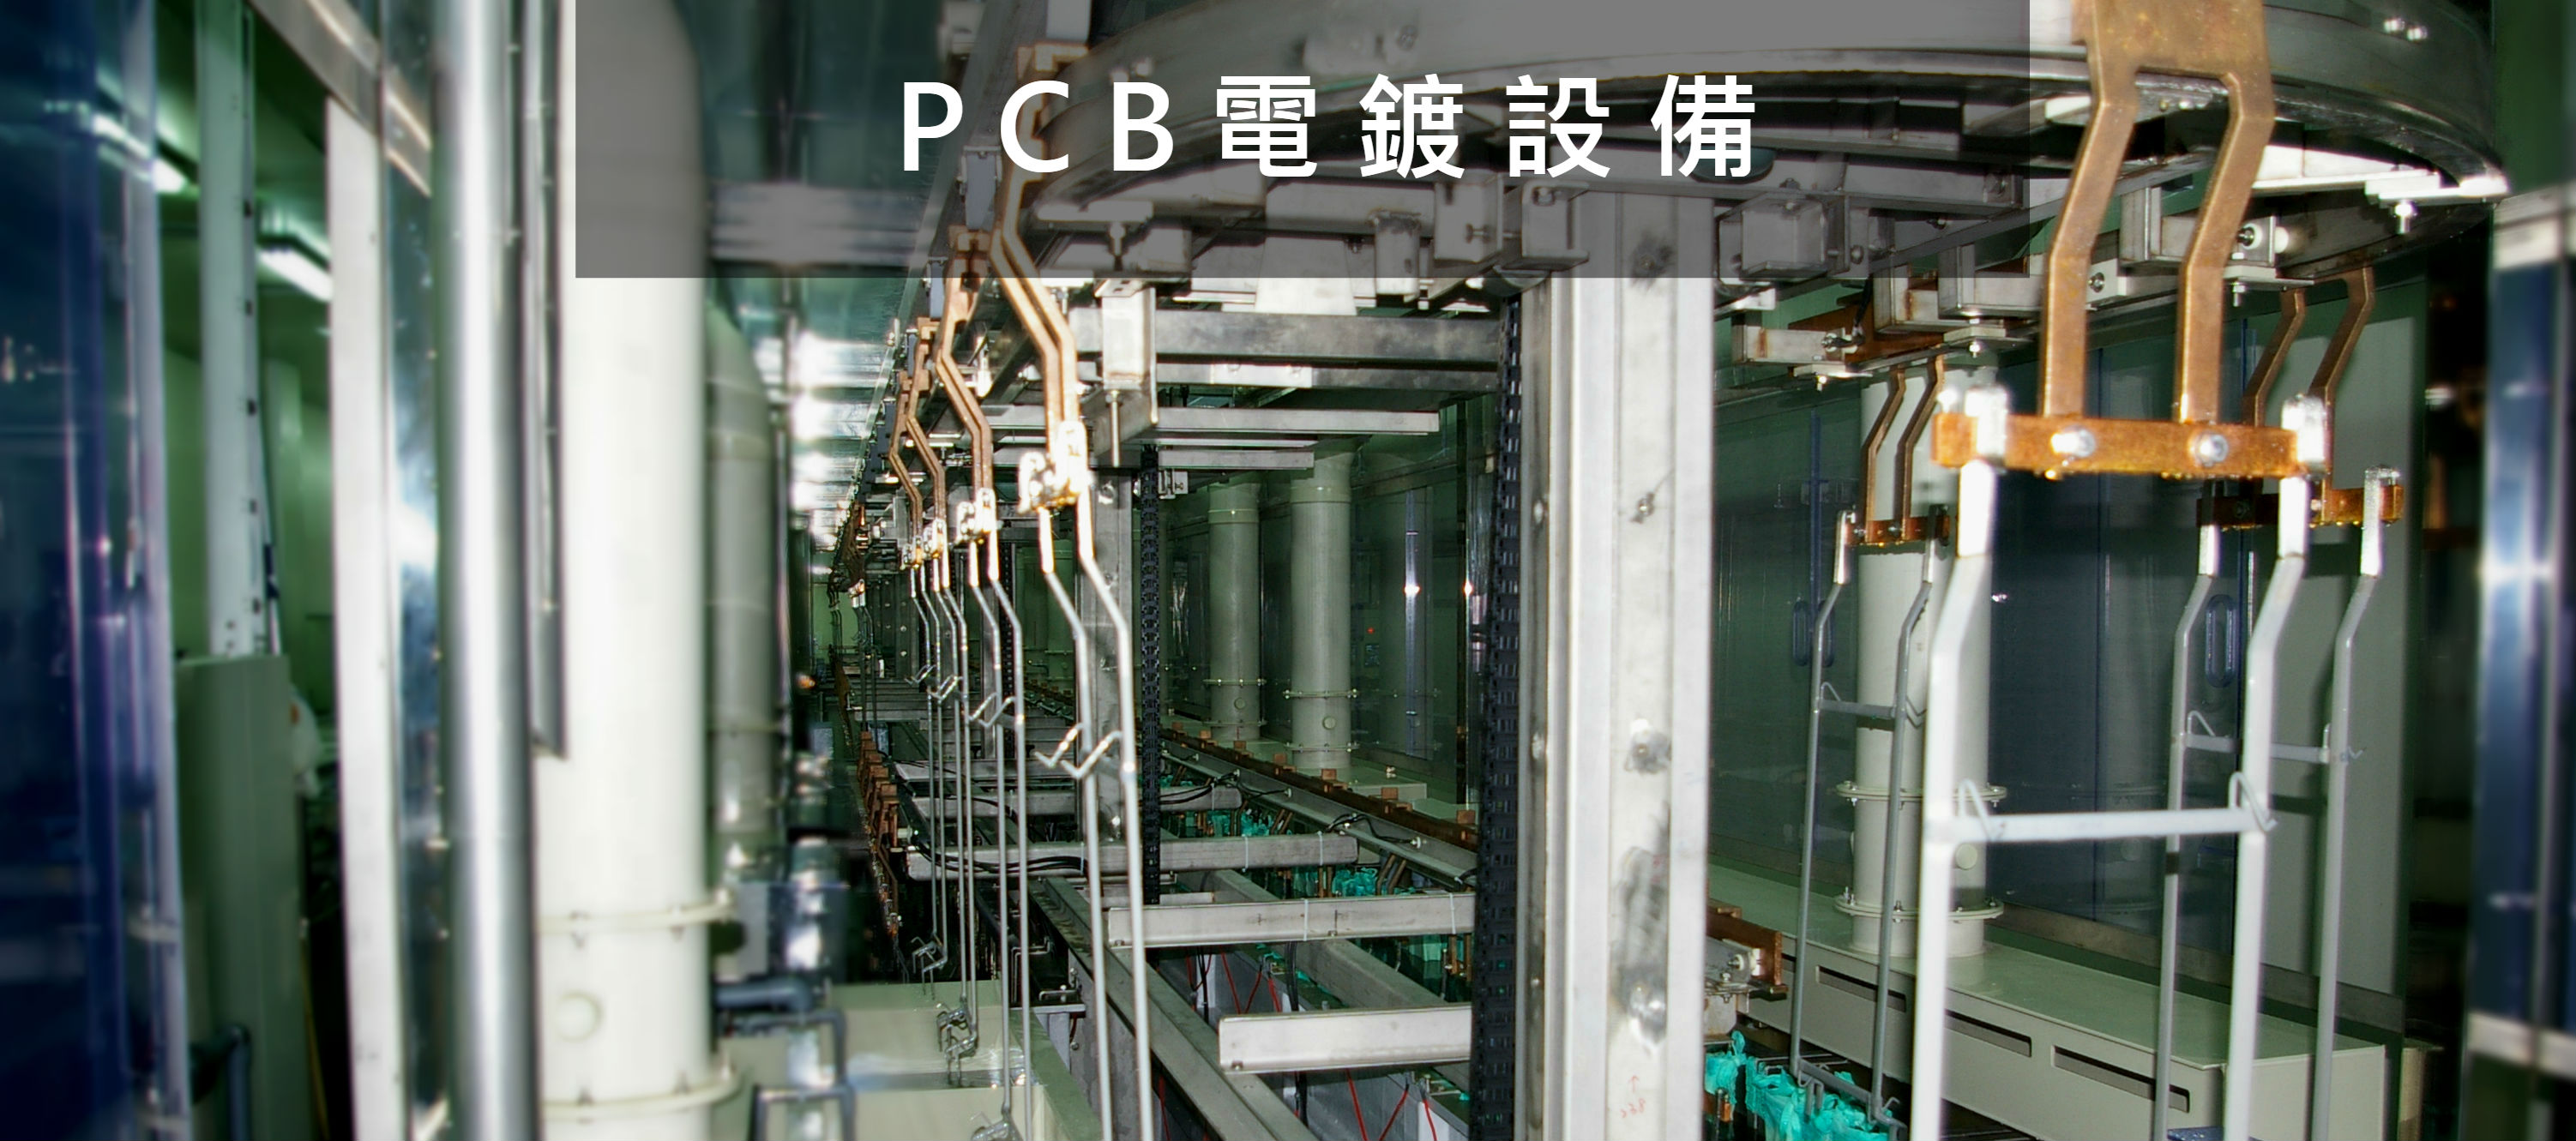 PCB_連續電鍍